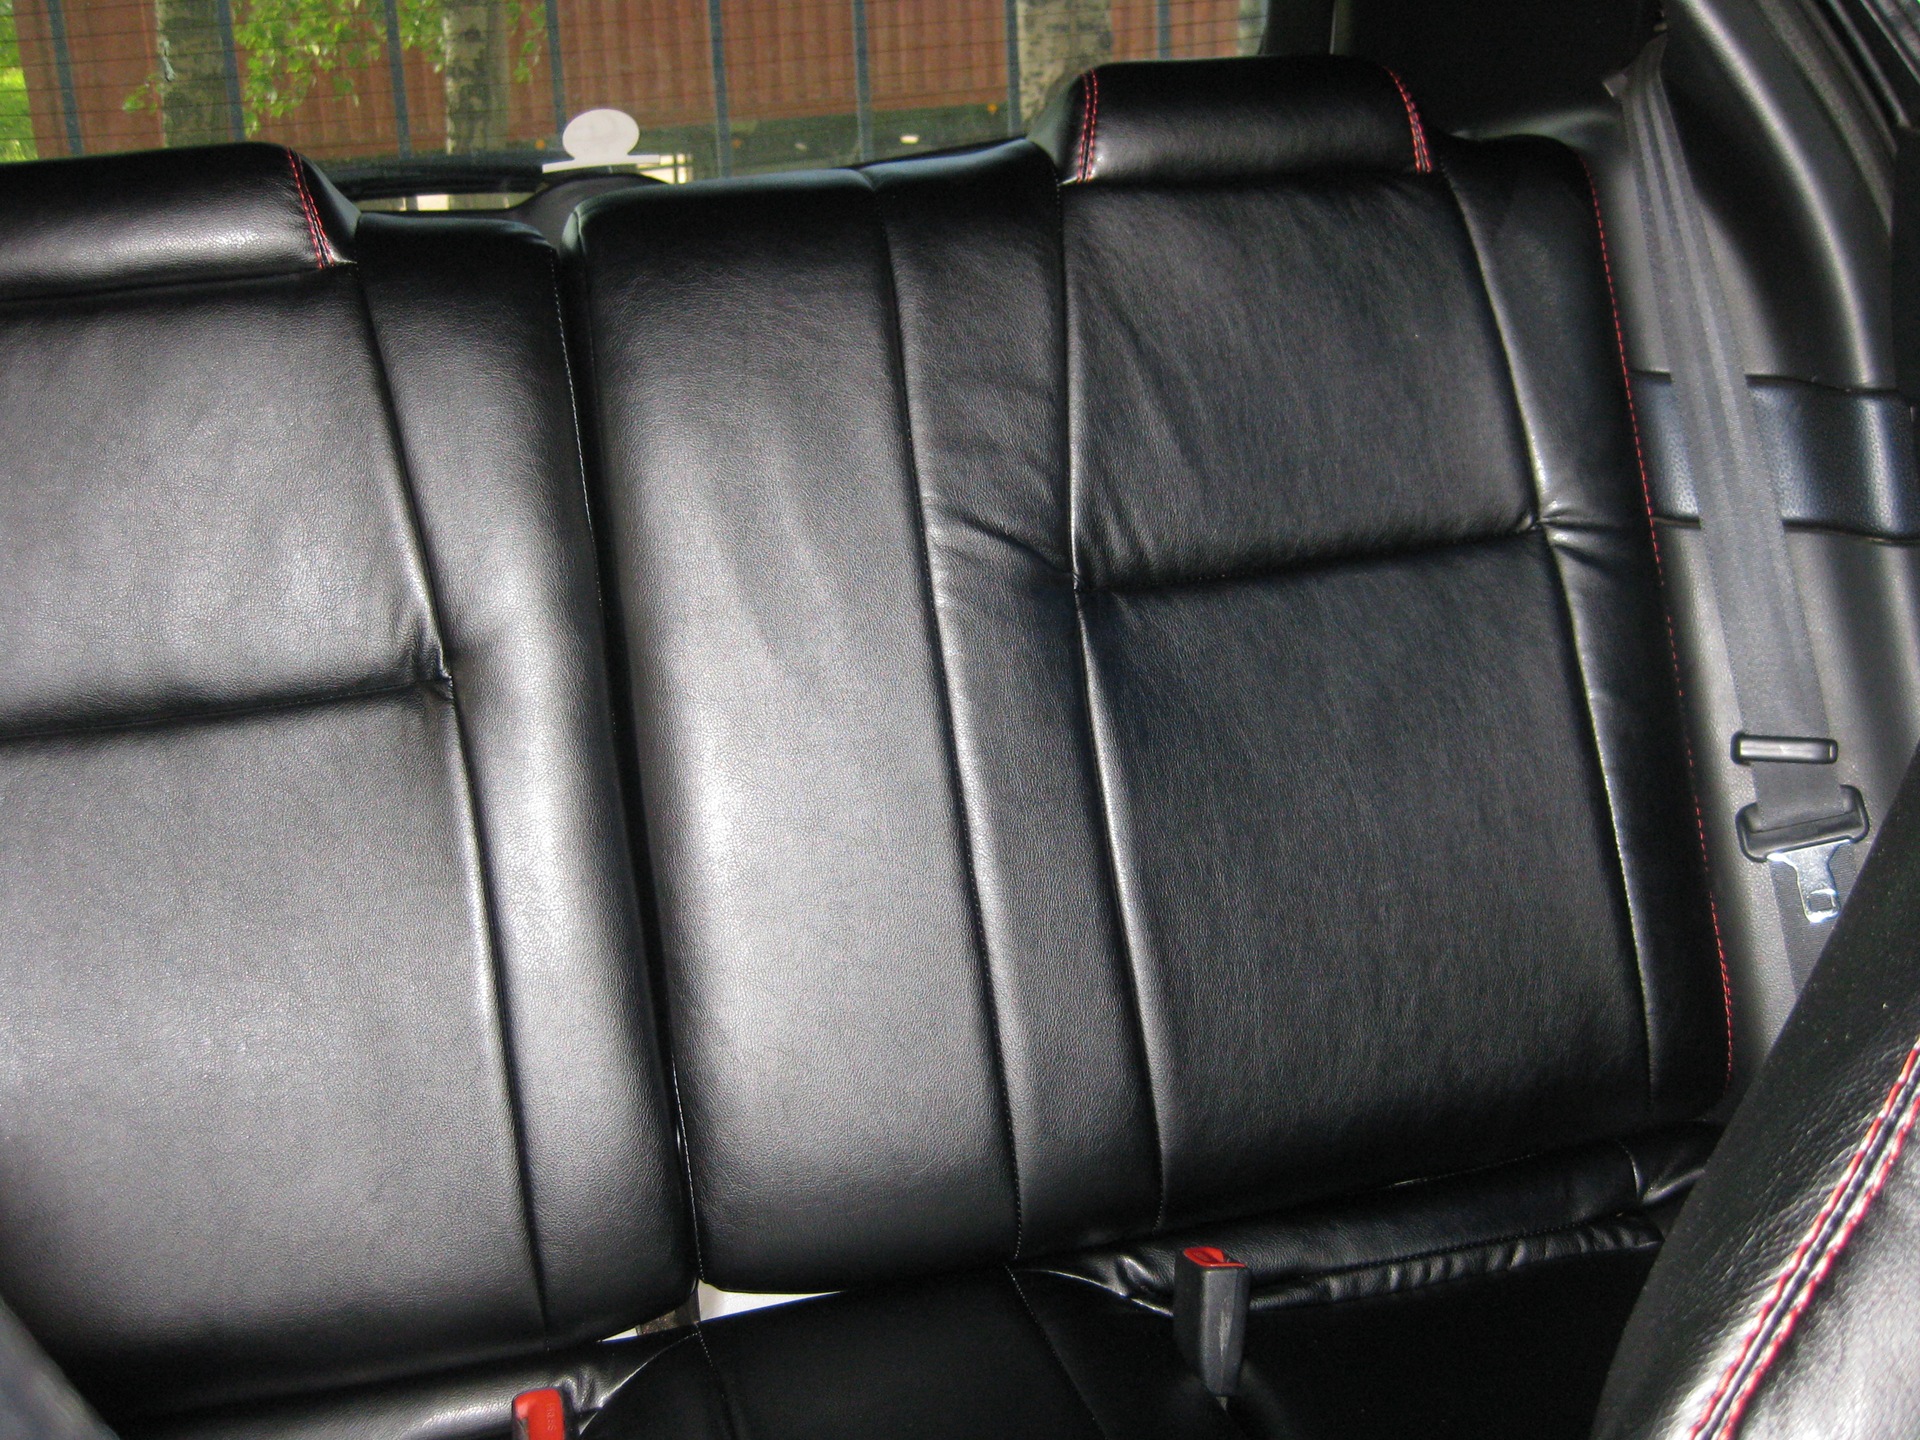 Interior upholstery - Toyota Will VS 18 L 2002